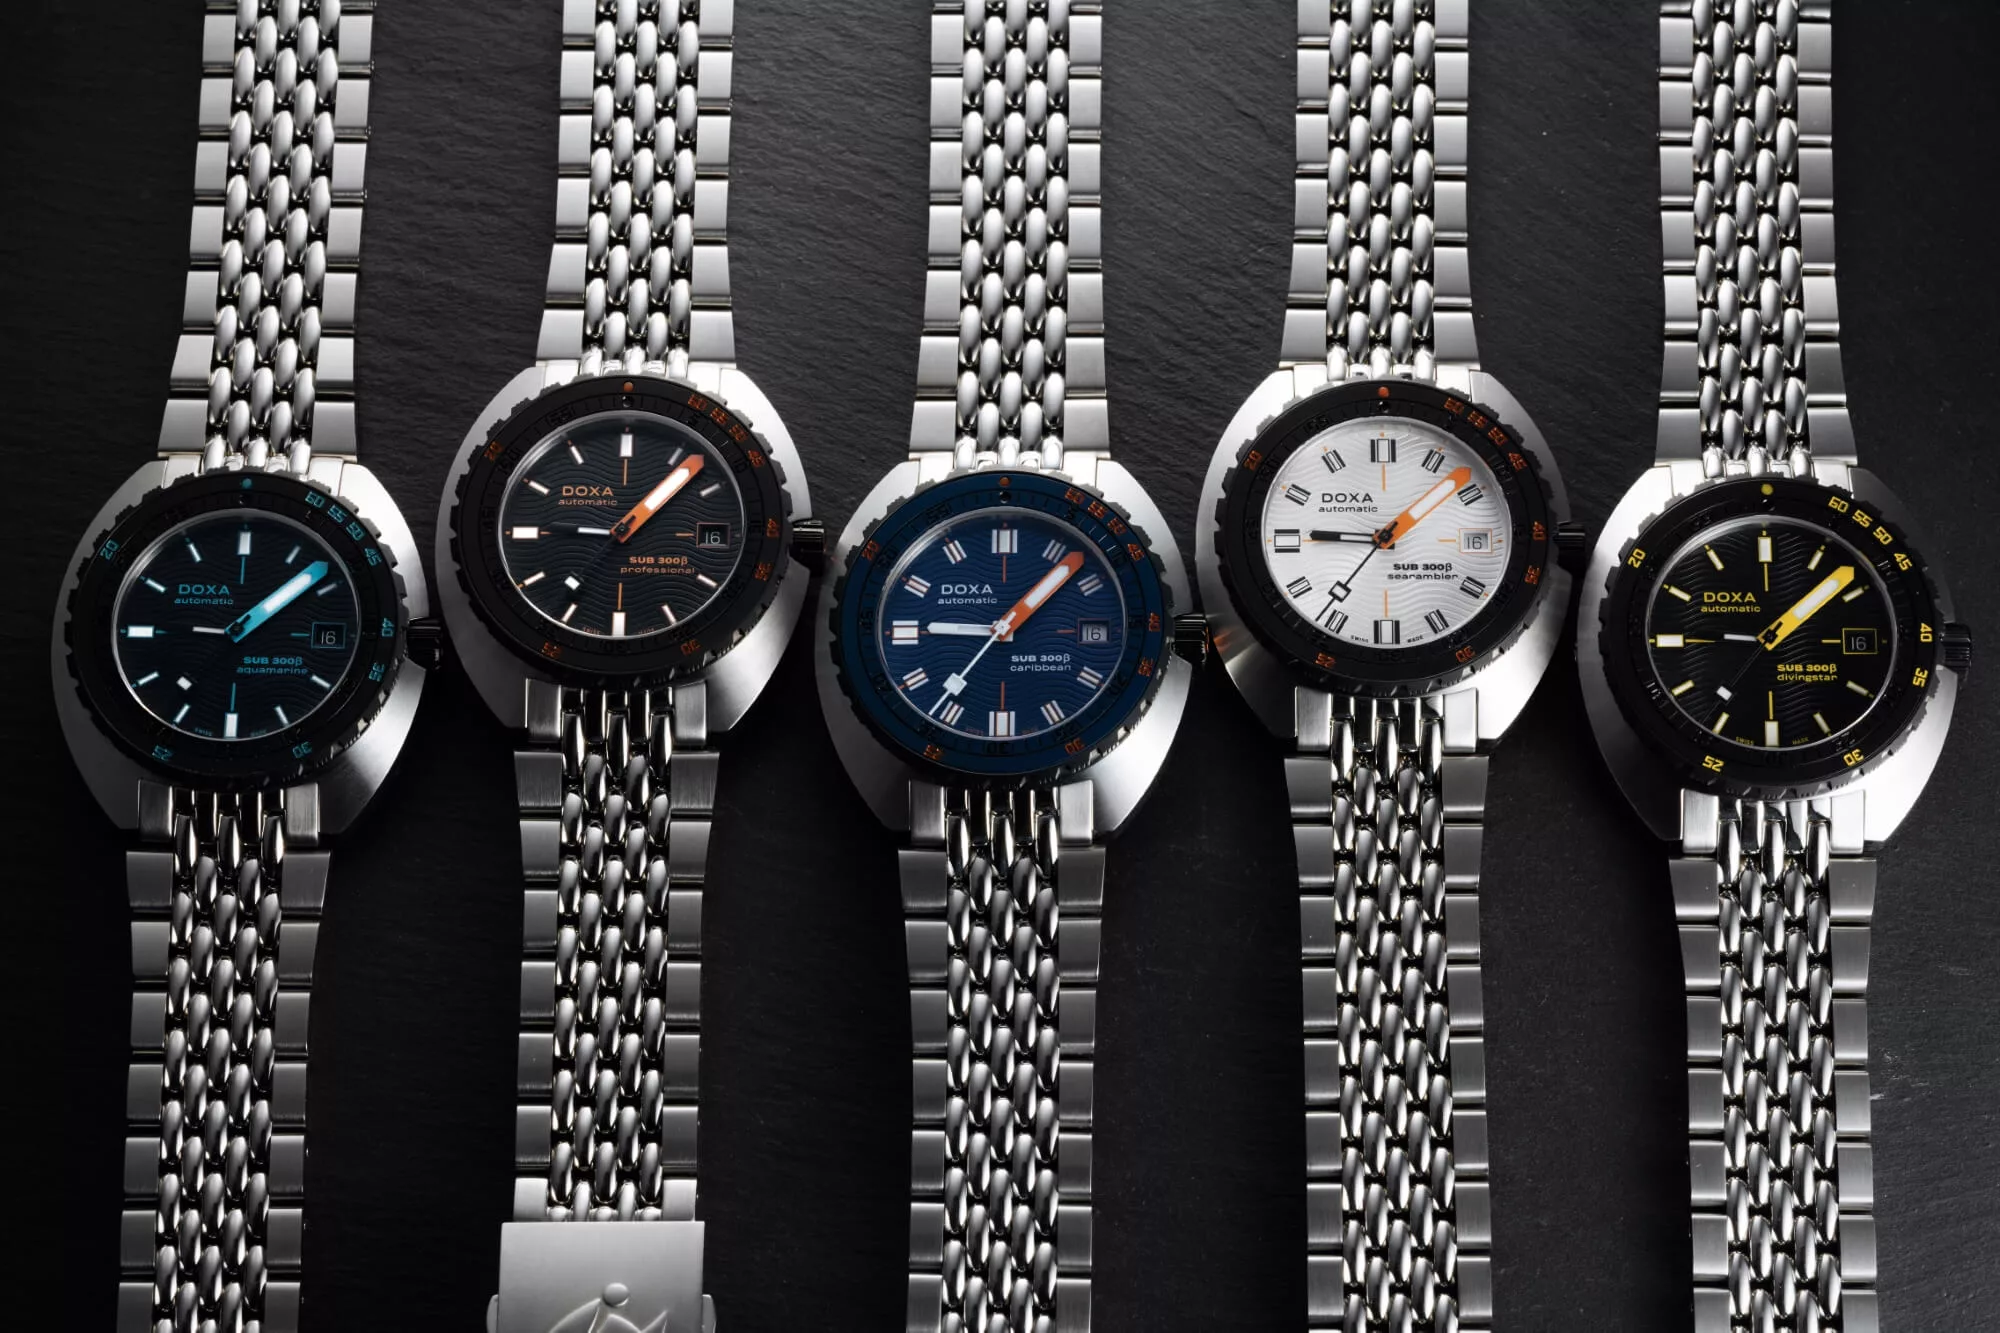 Conceptual Watch Design for DOXA Watches by Greg Bottle - Greg Bottle